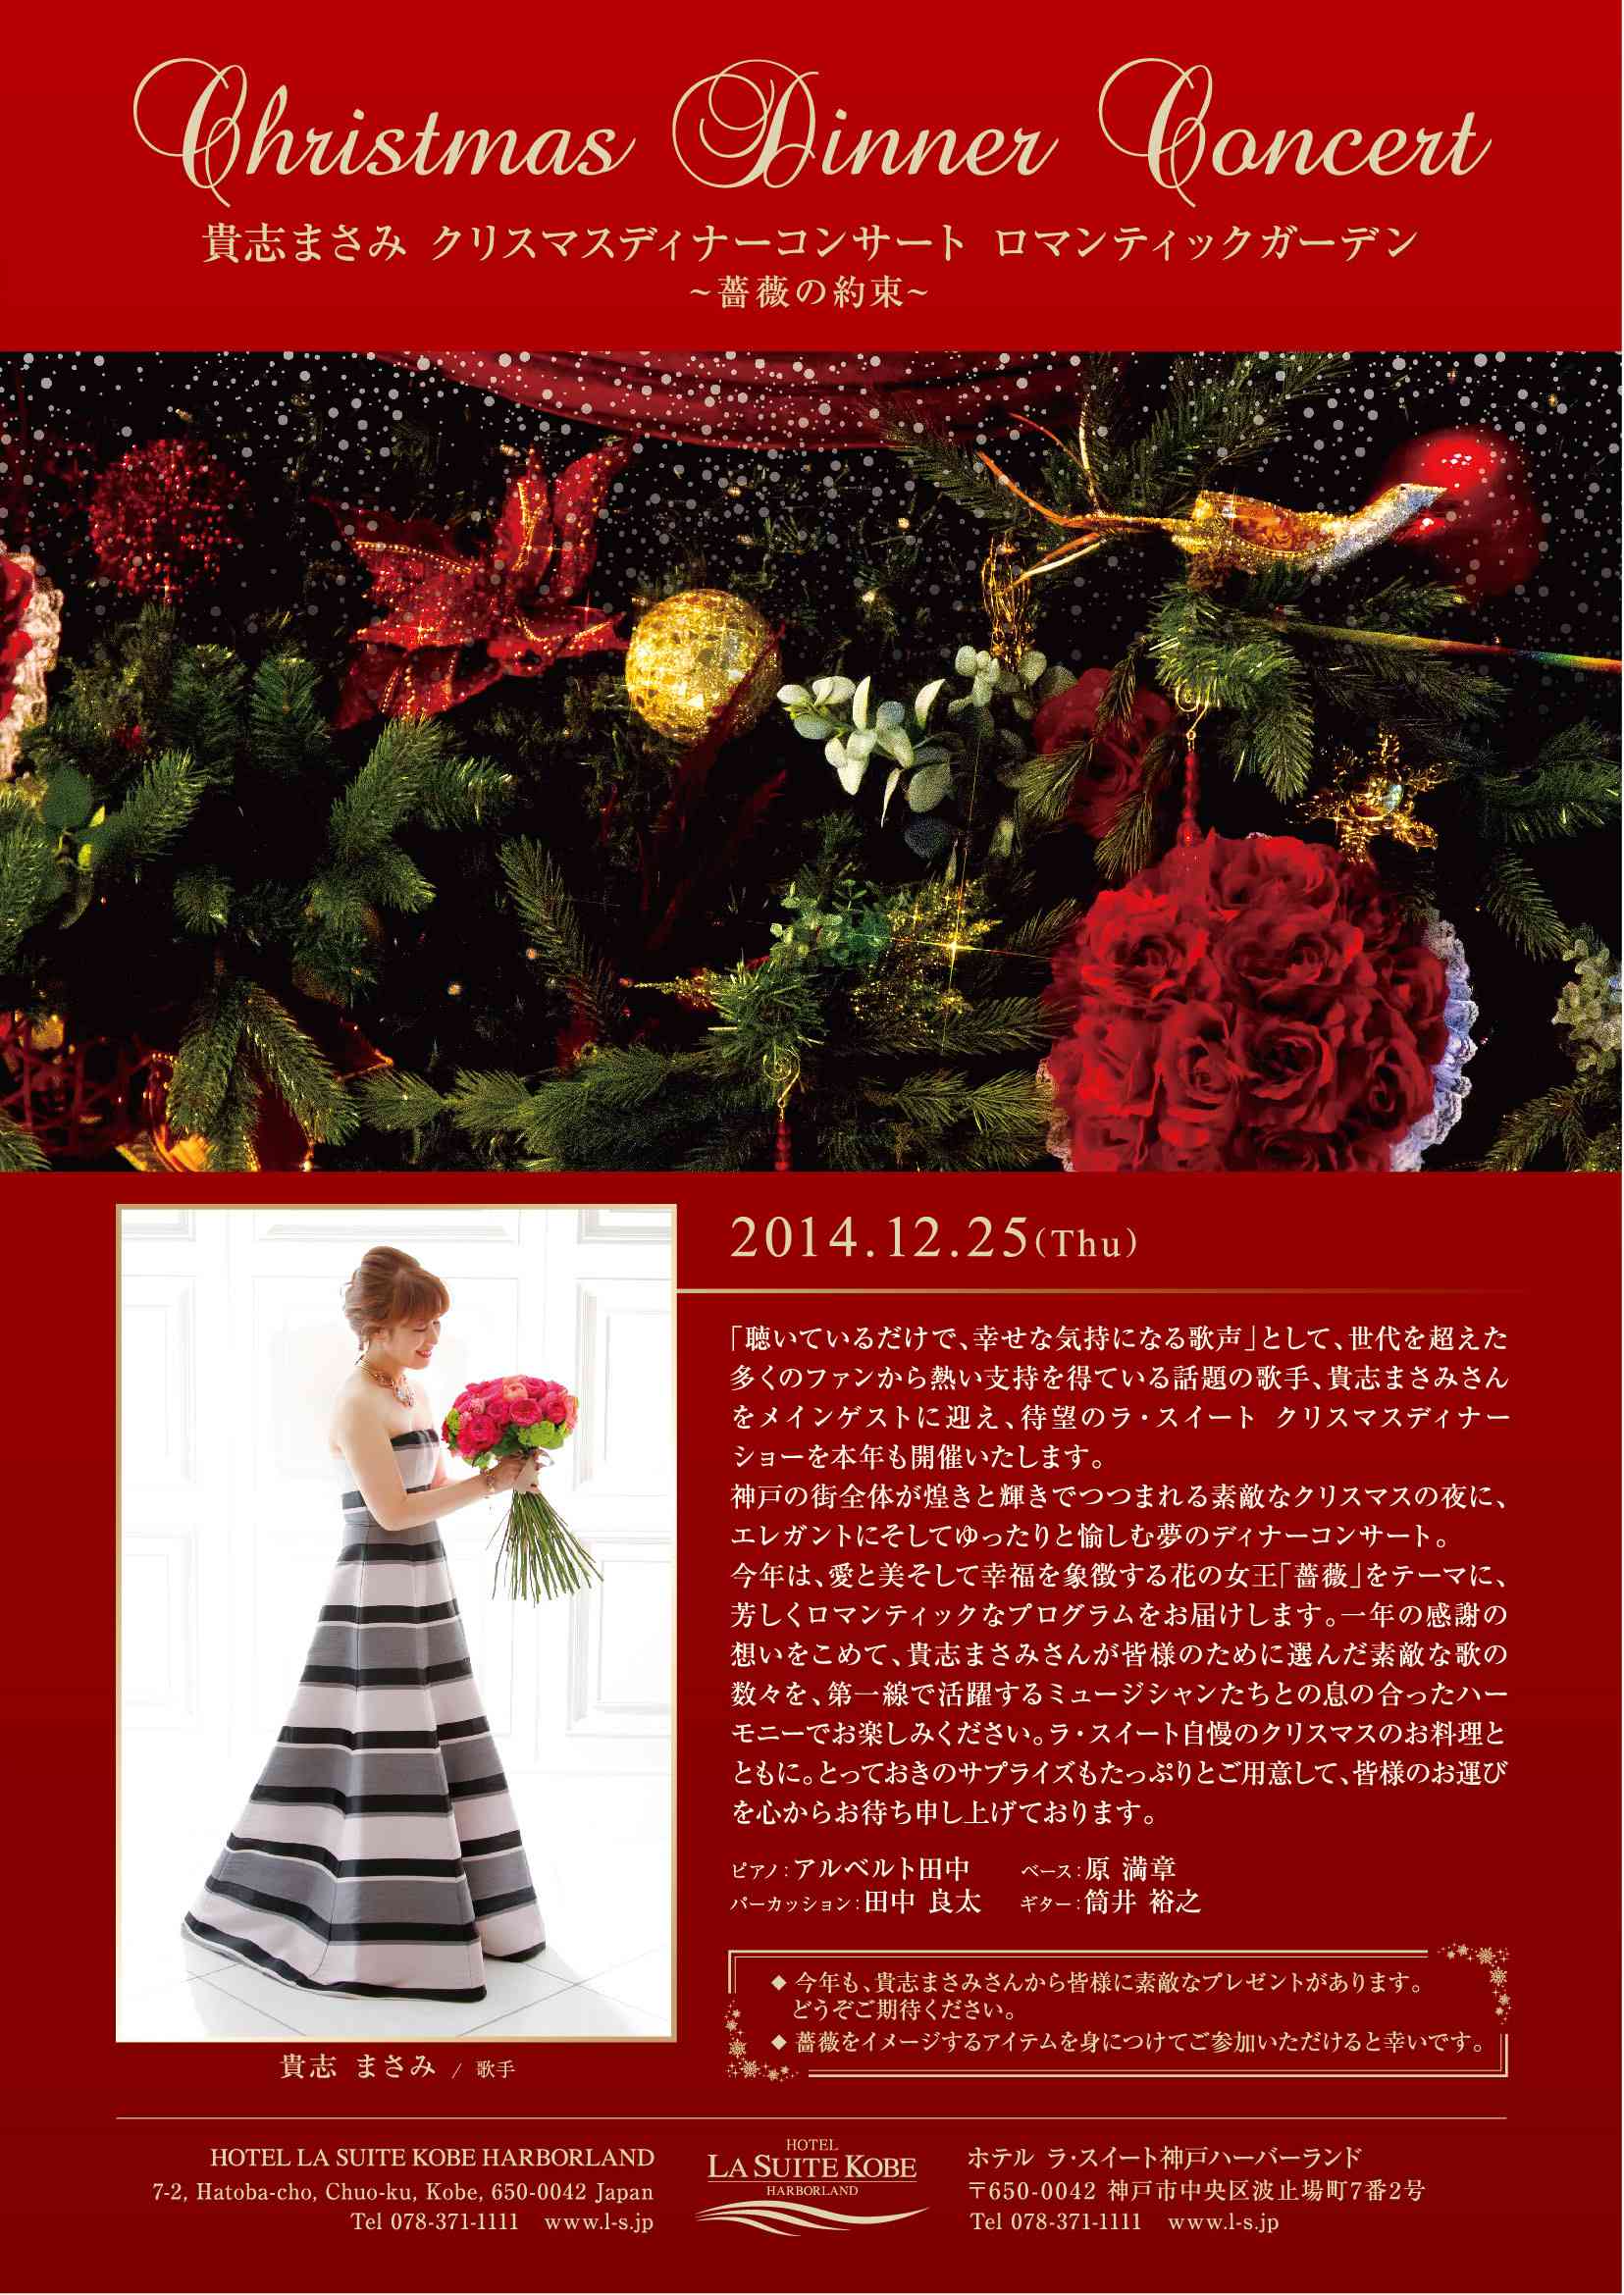 Featured image for “クリスマスディナーコンサート ロマンティックガーデン 〜薔薇の約束〜”